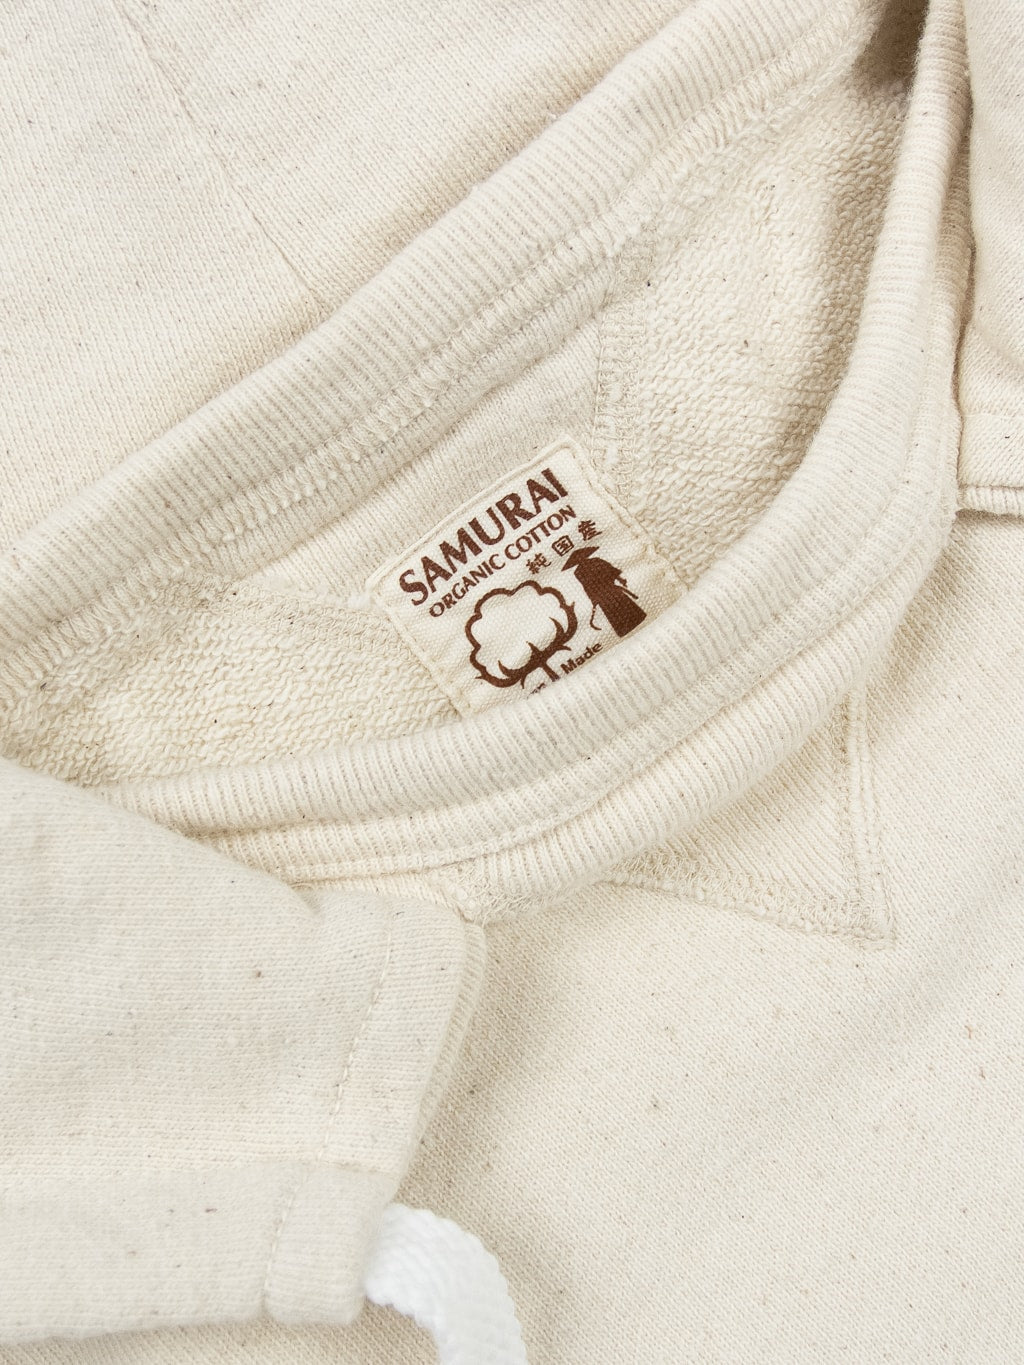 Samurai Jeans Japanese Cotton Hoody Natural sweatshirt interior tag